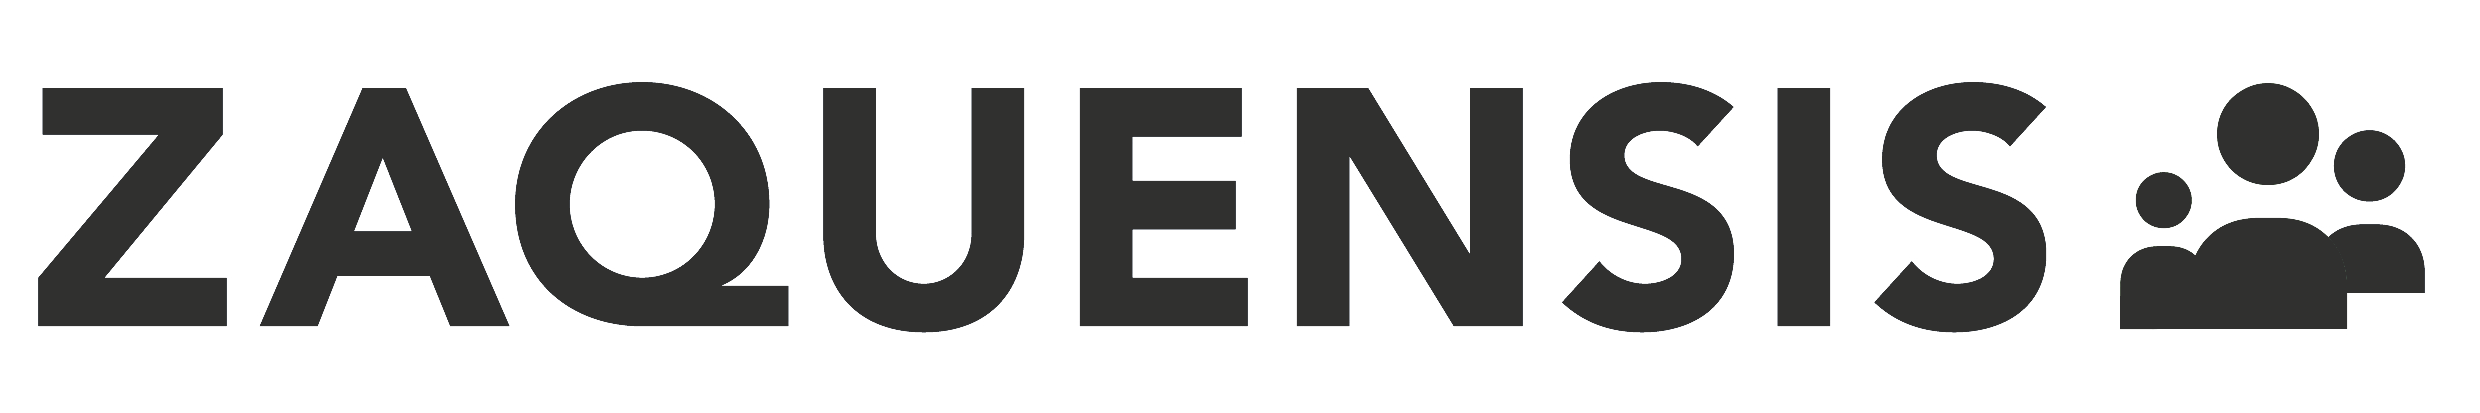 zaquensis logo